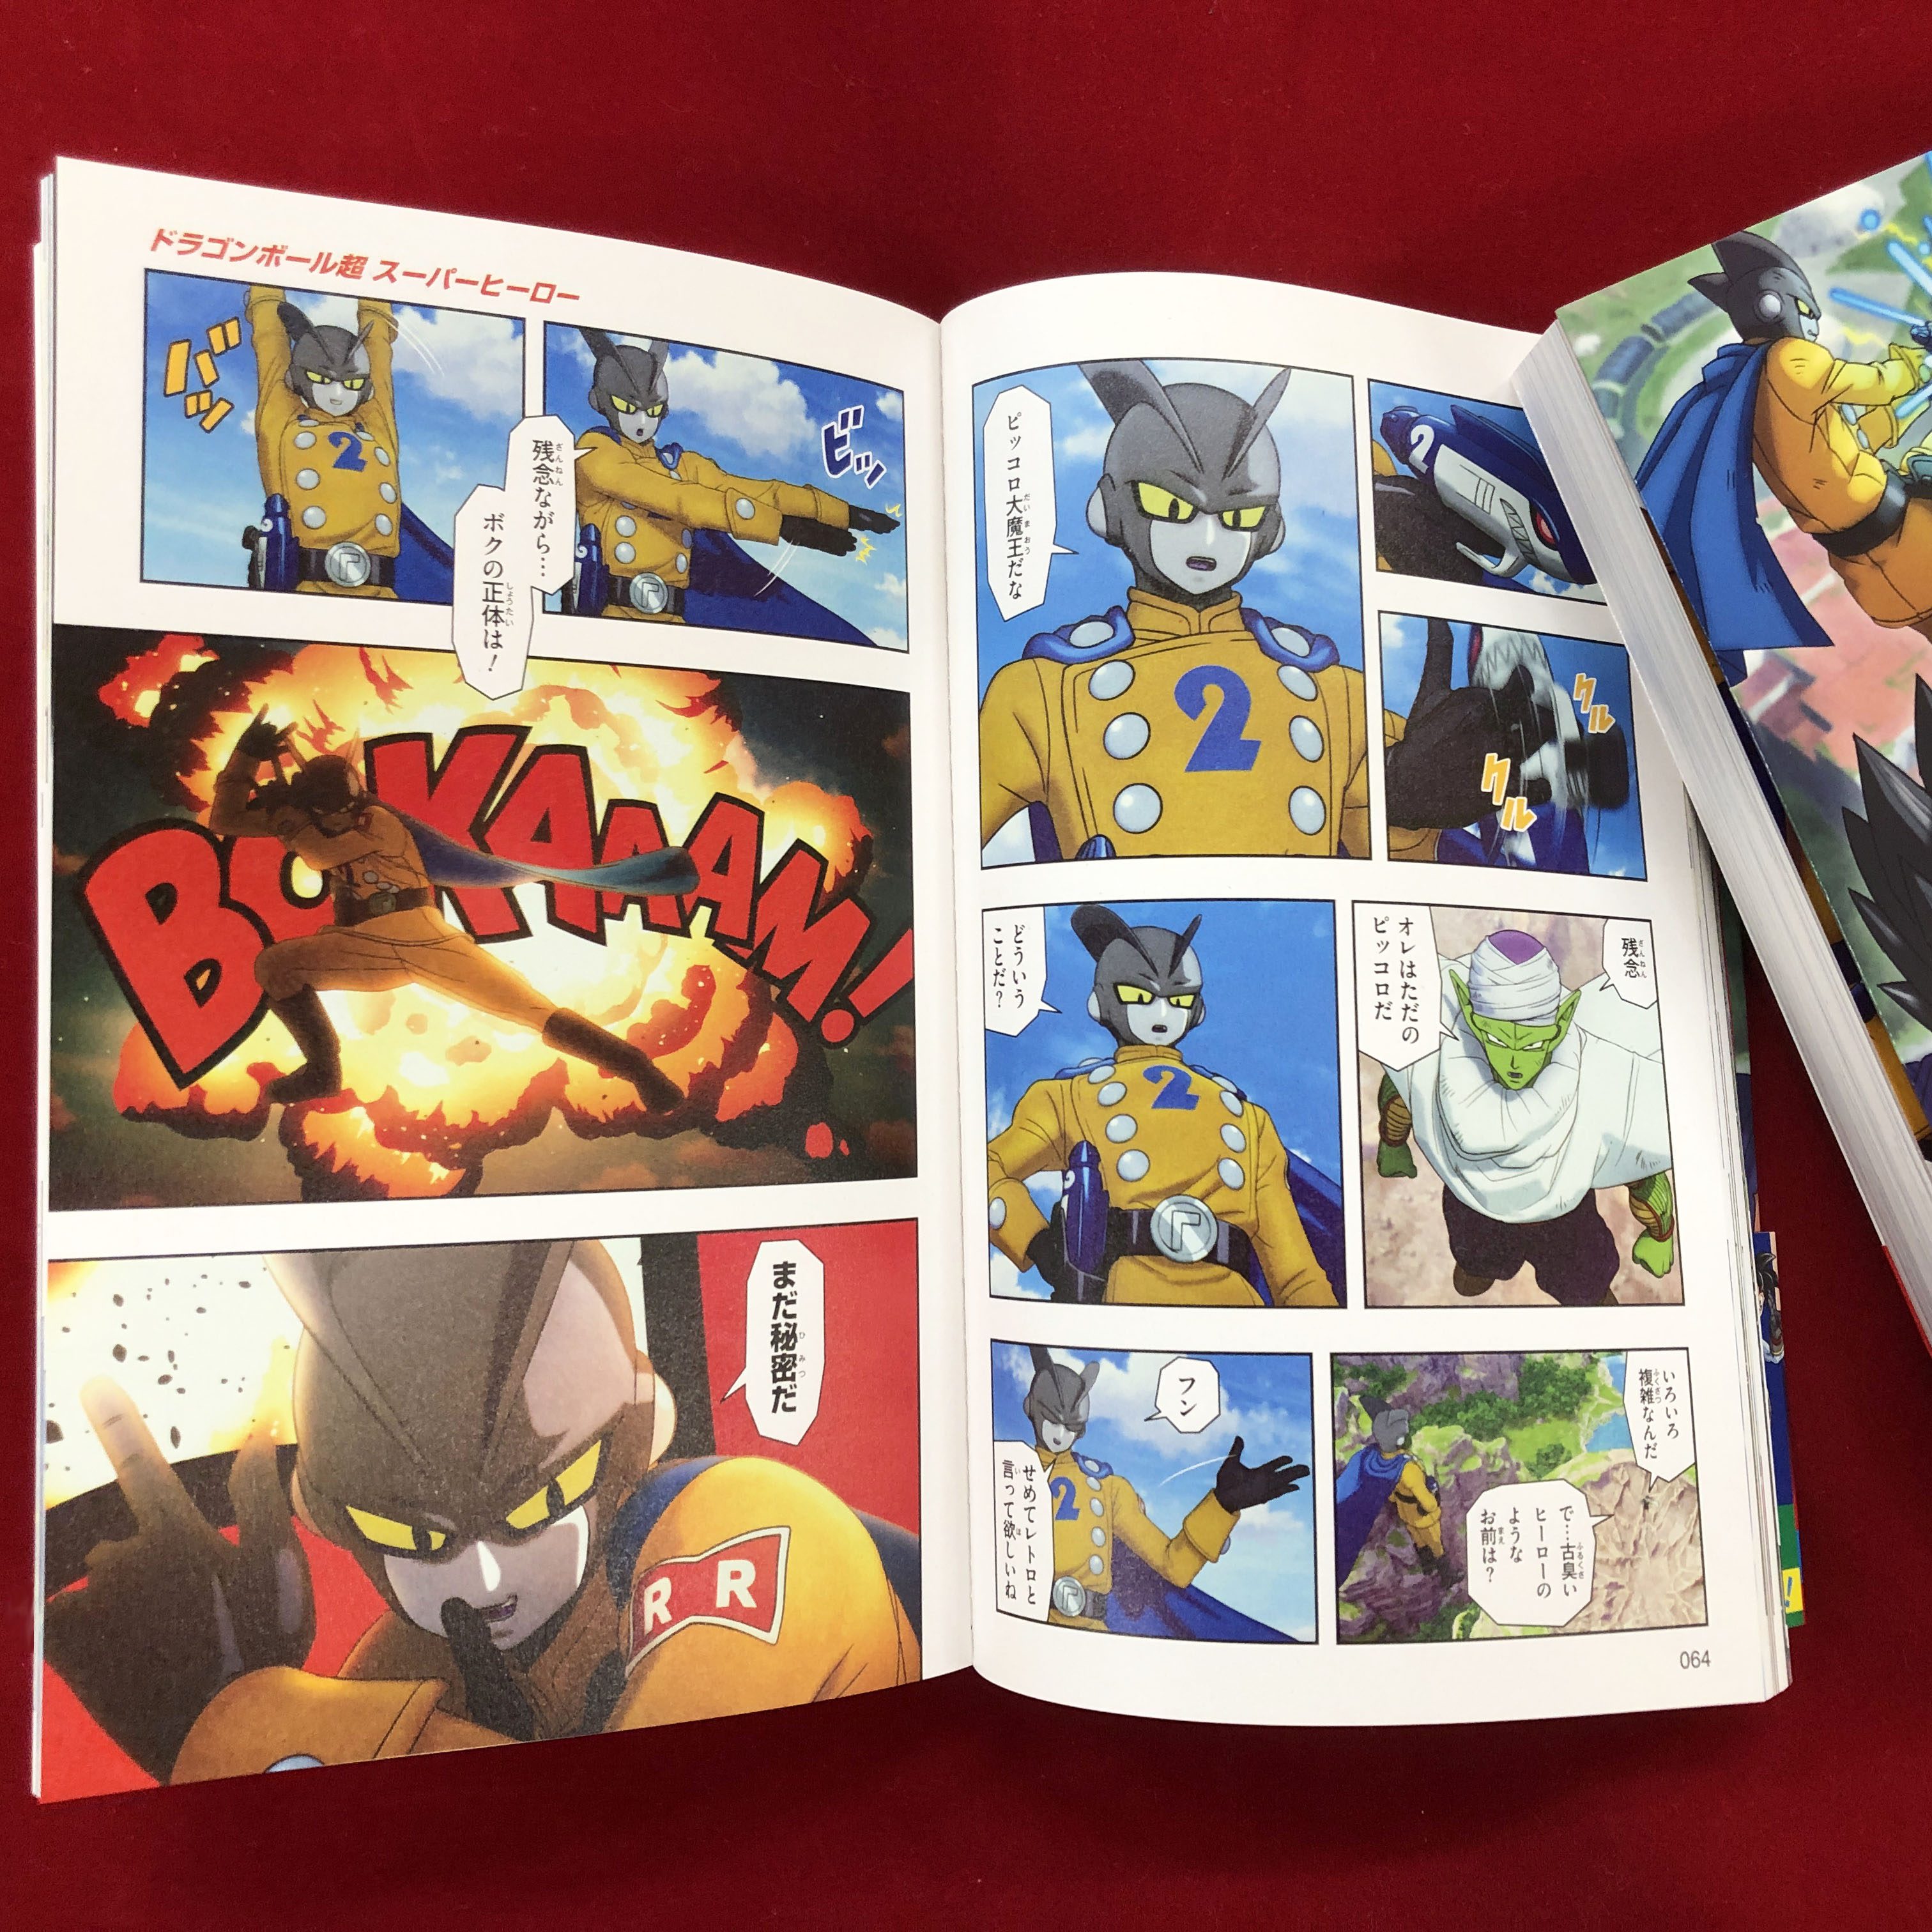 sneak peek of the Dragon Ball Super: Super Hero Anime Comic